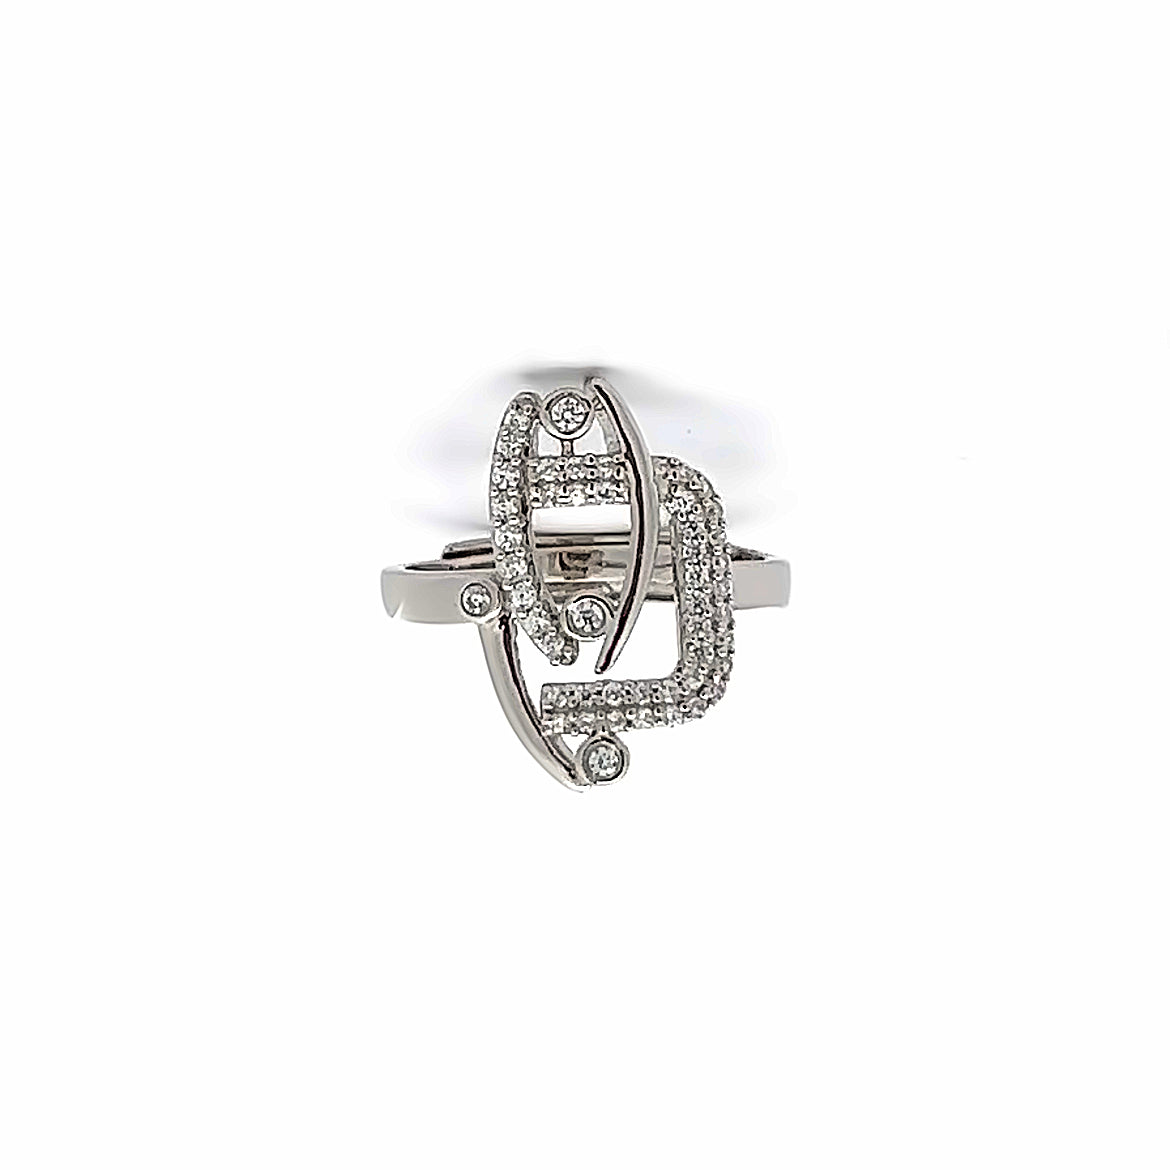 Bridal Brilliance Silver Ring